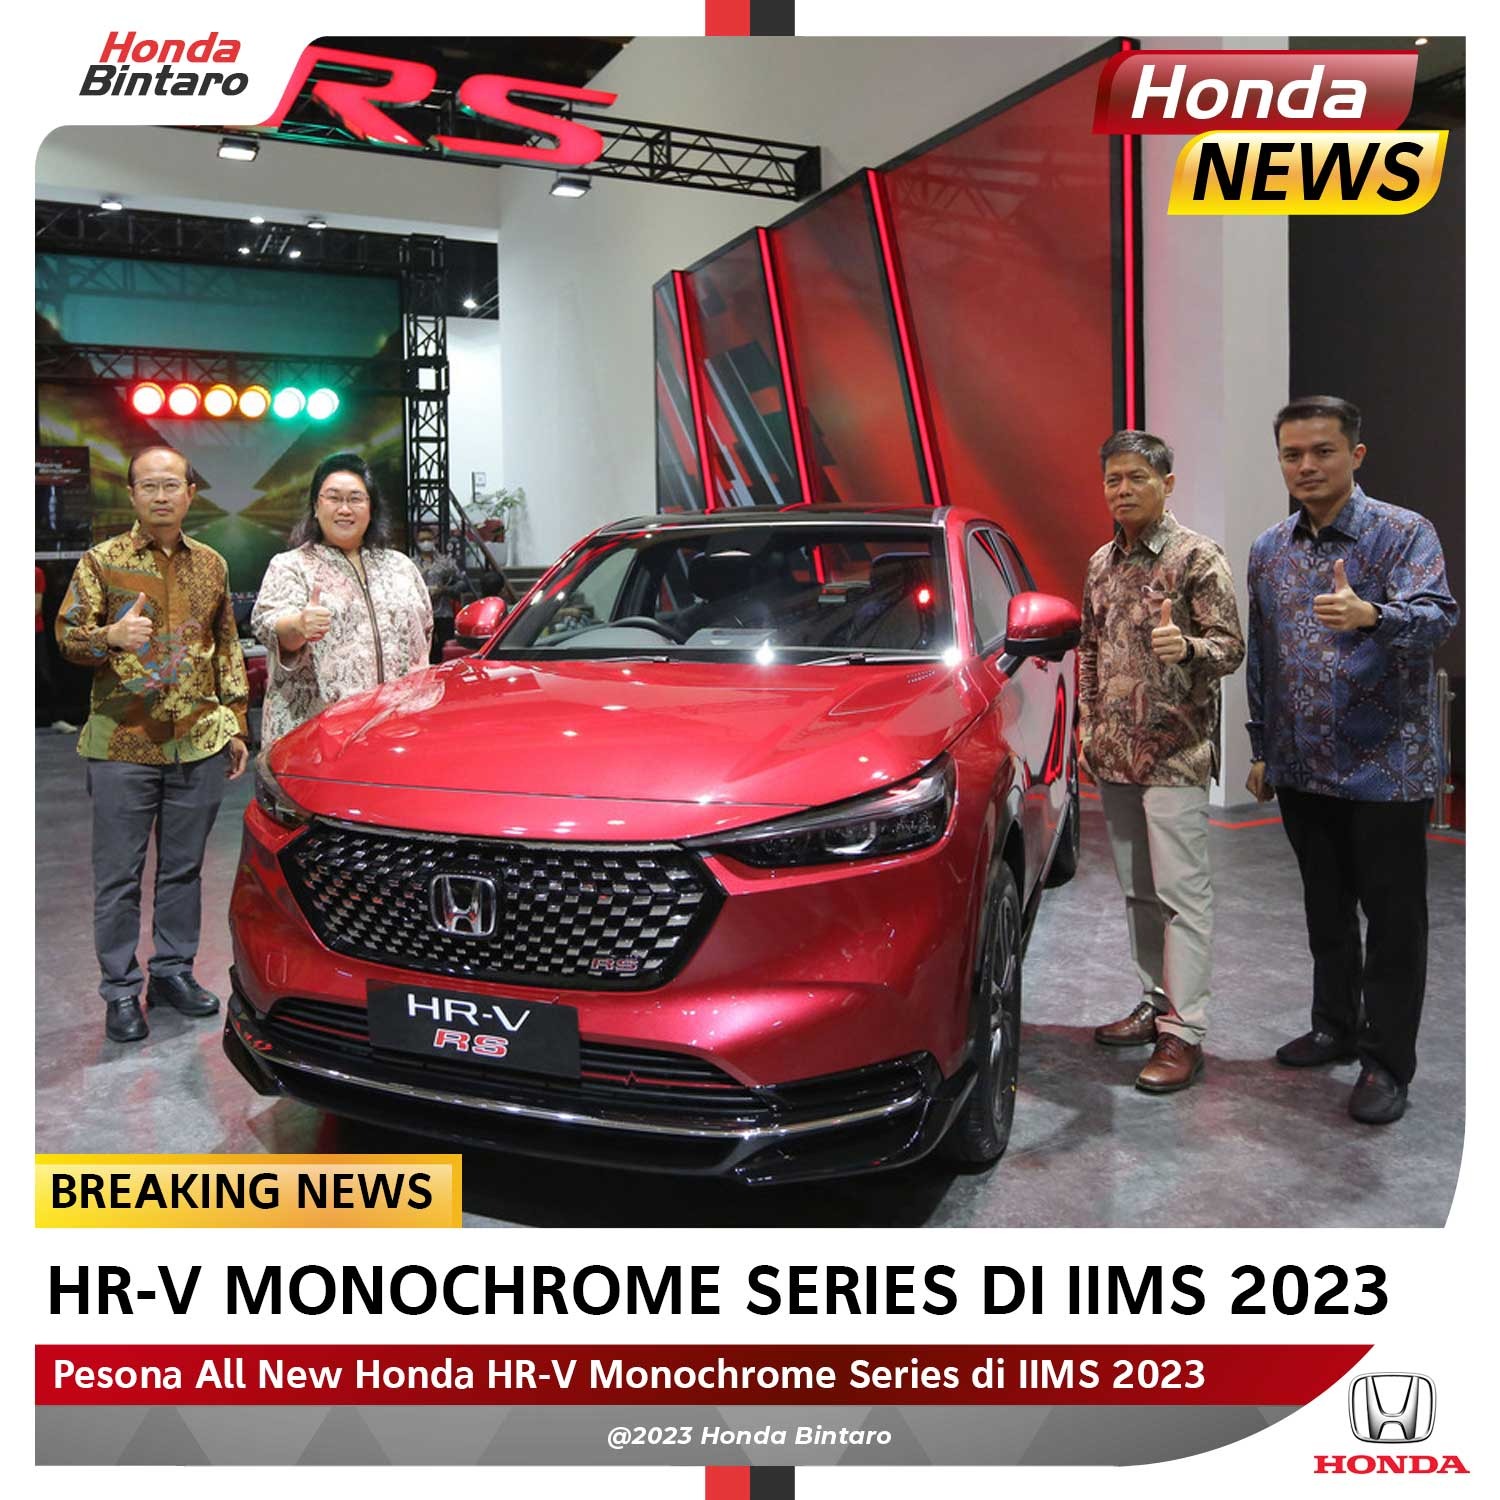 Pesona All New Honda HR-V Monochrome Series di IIMS 2023